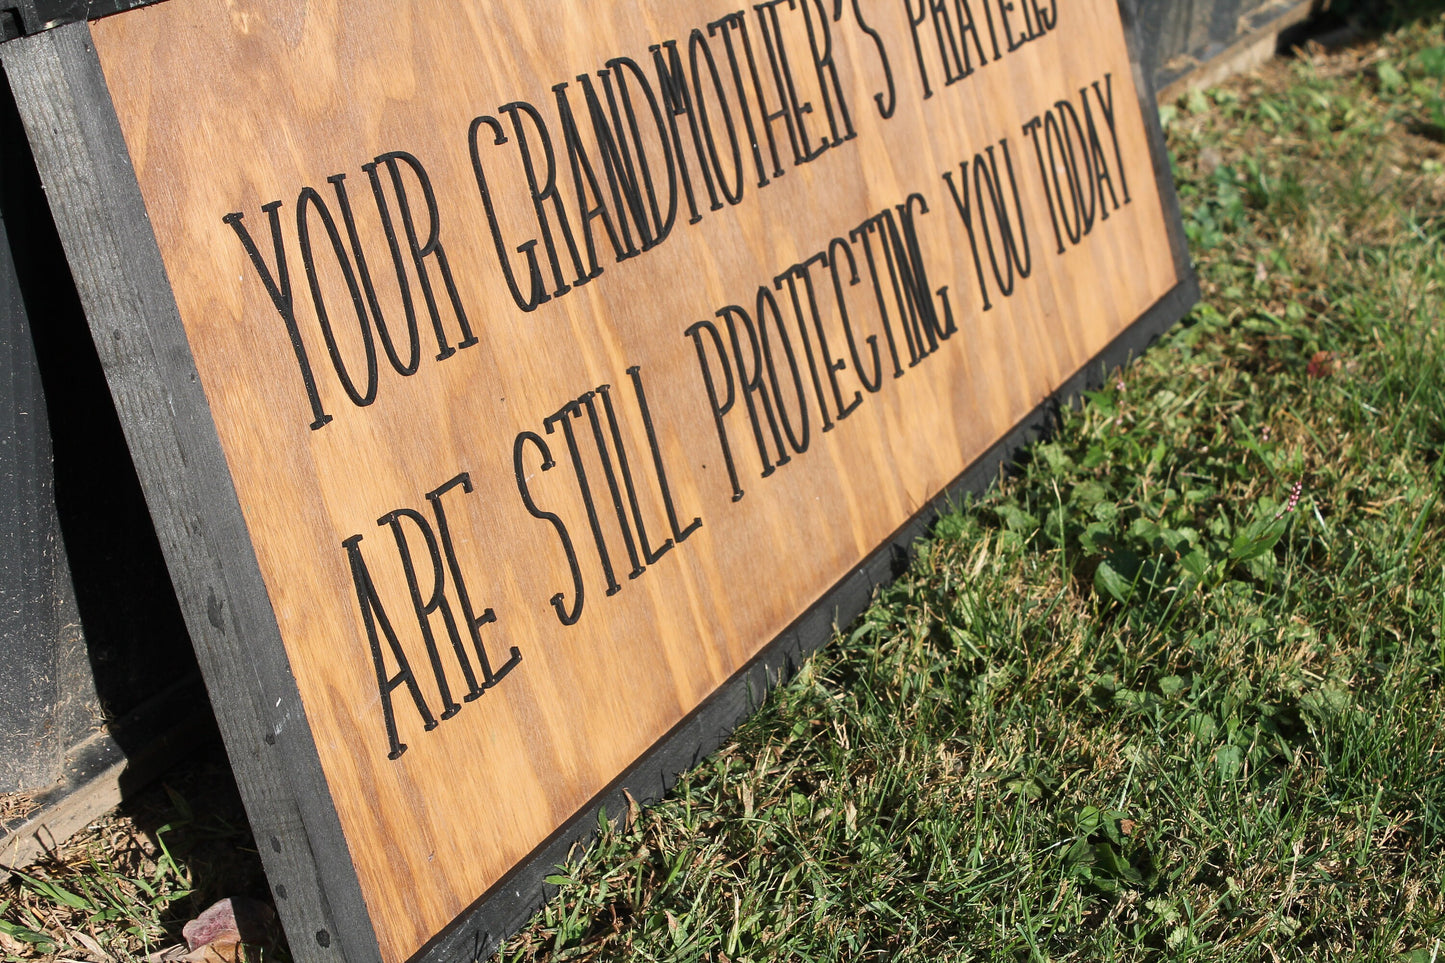 Grandmas Prayers Protection Love Family Grandmother Biblical Home Decor Uplifting 3D Handmade Wall Art Inspirational Raised Wooden Sign